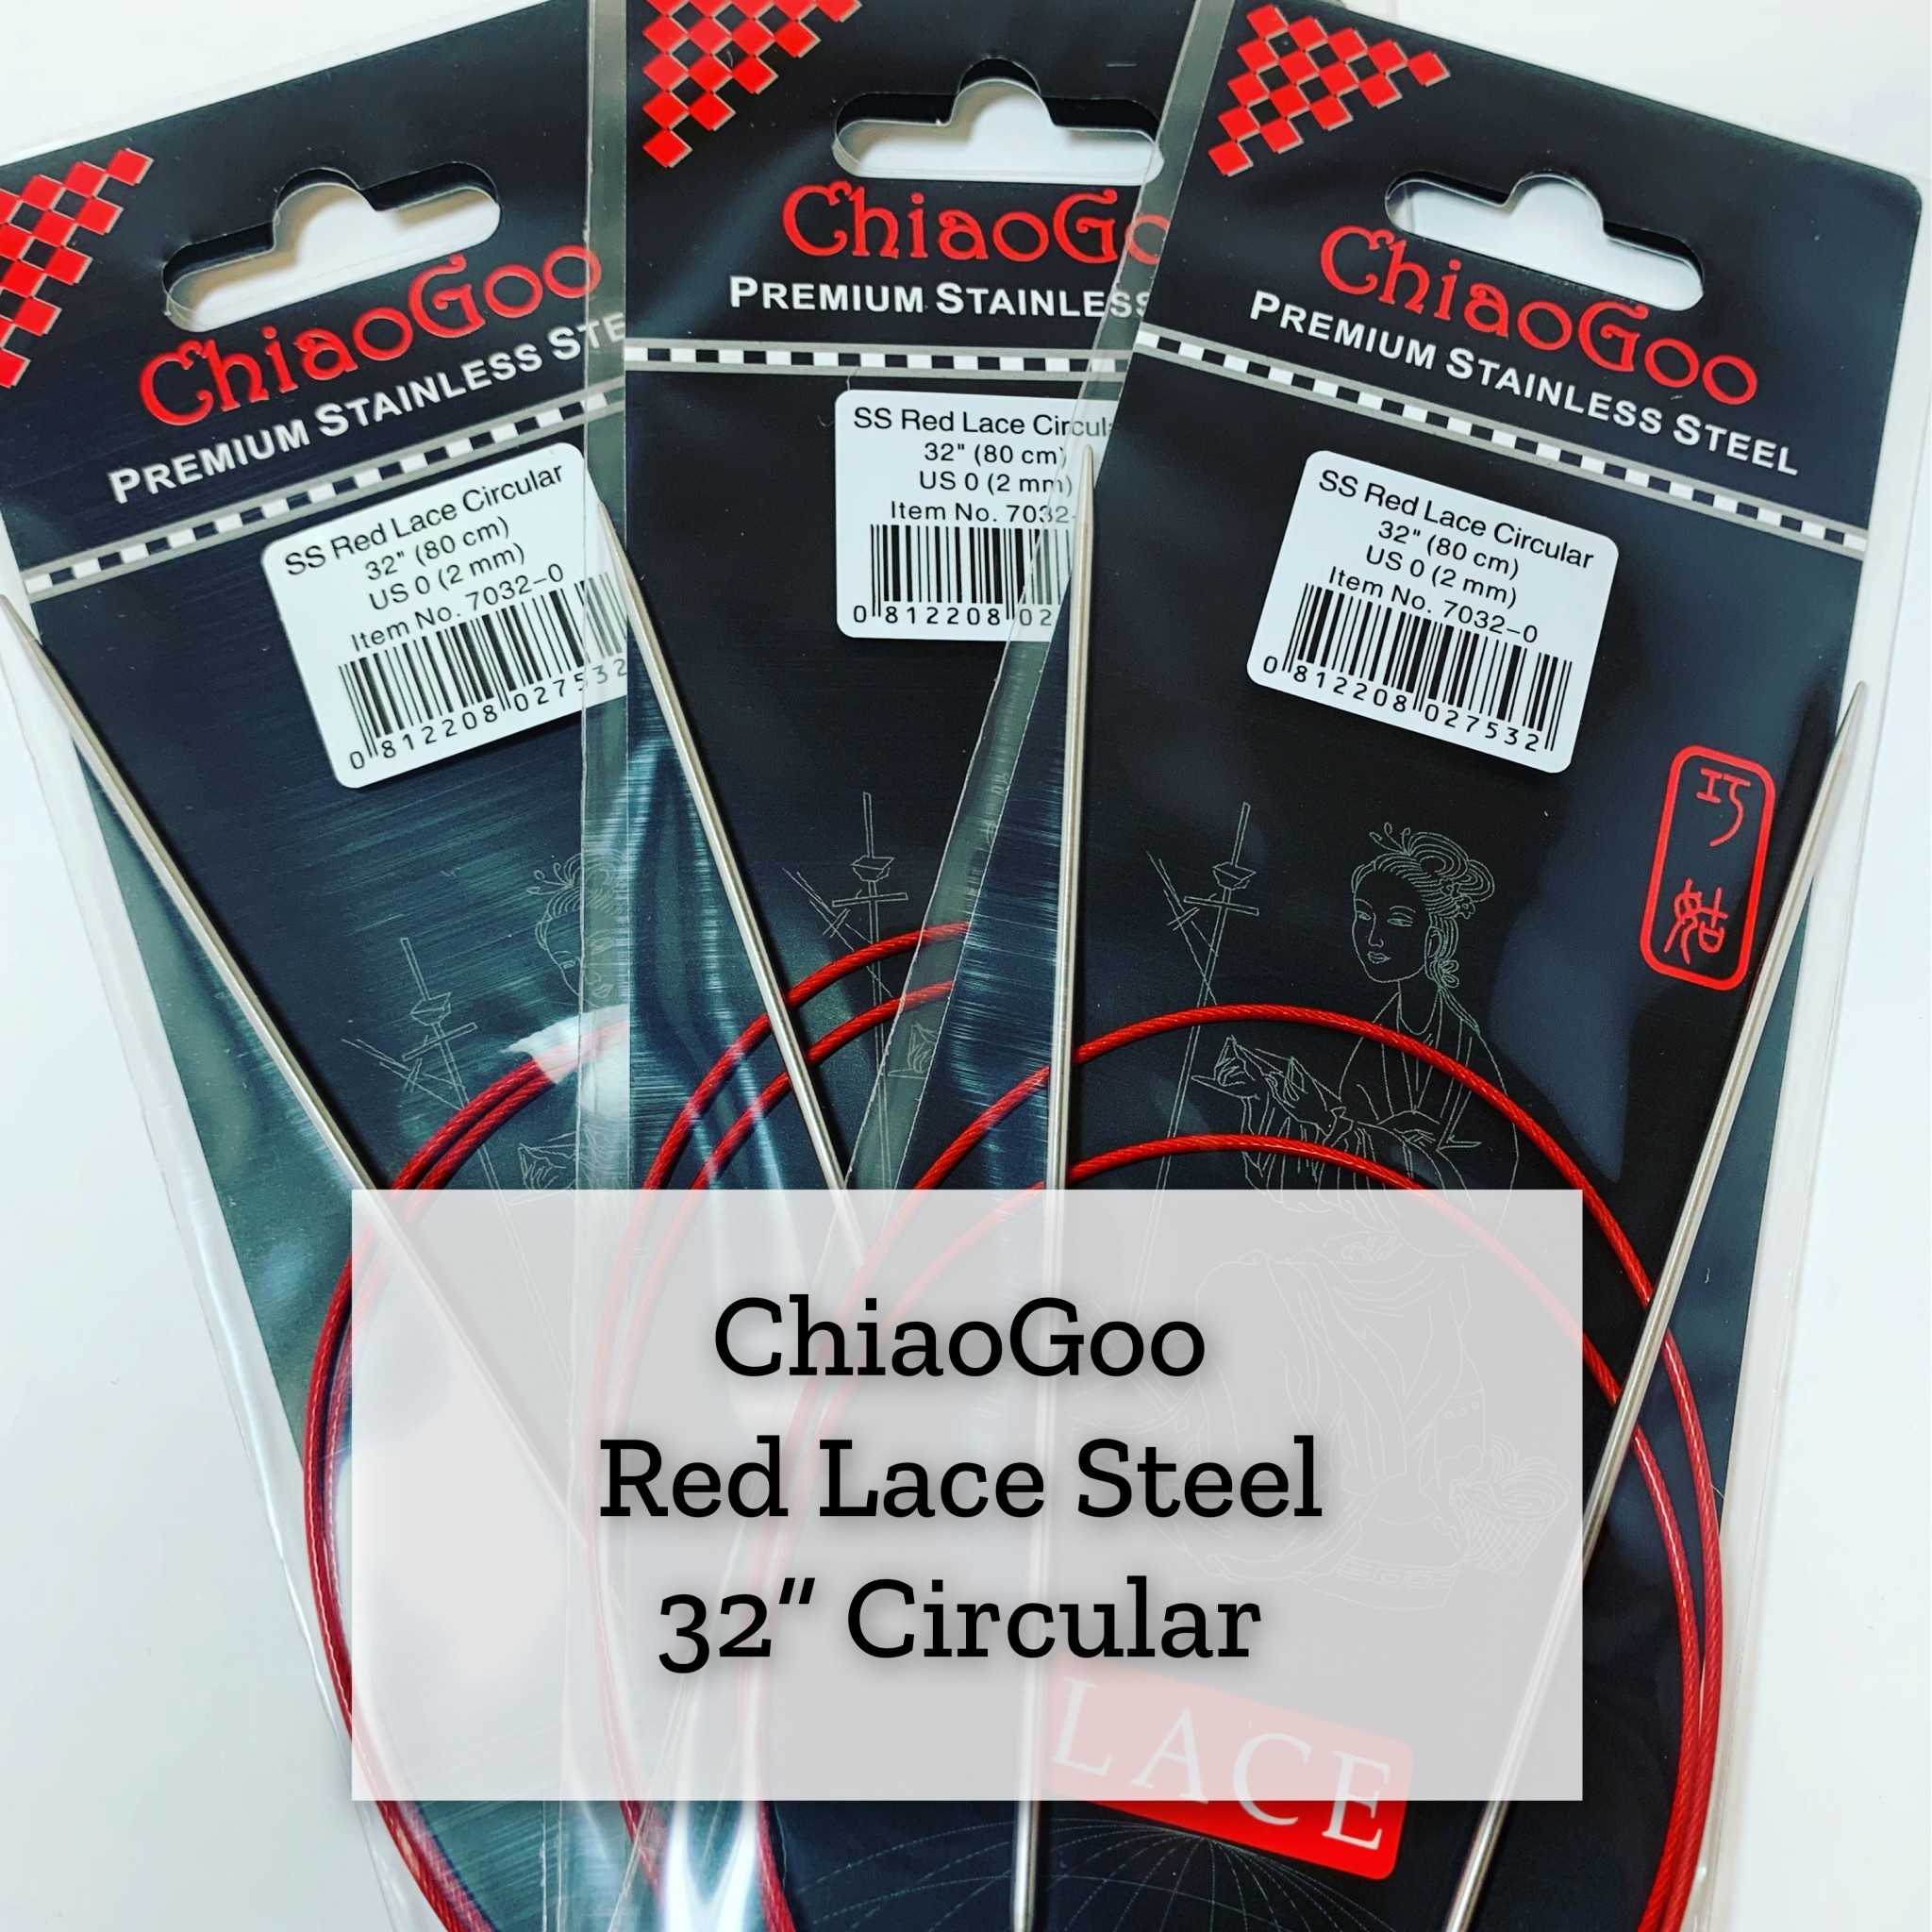 ChiaoGoo Red Lace Steel - 32" 6.5 mm